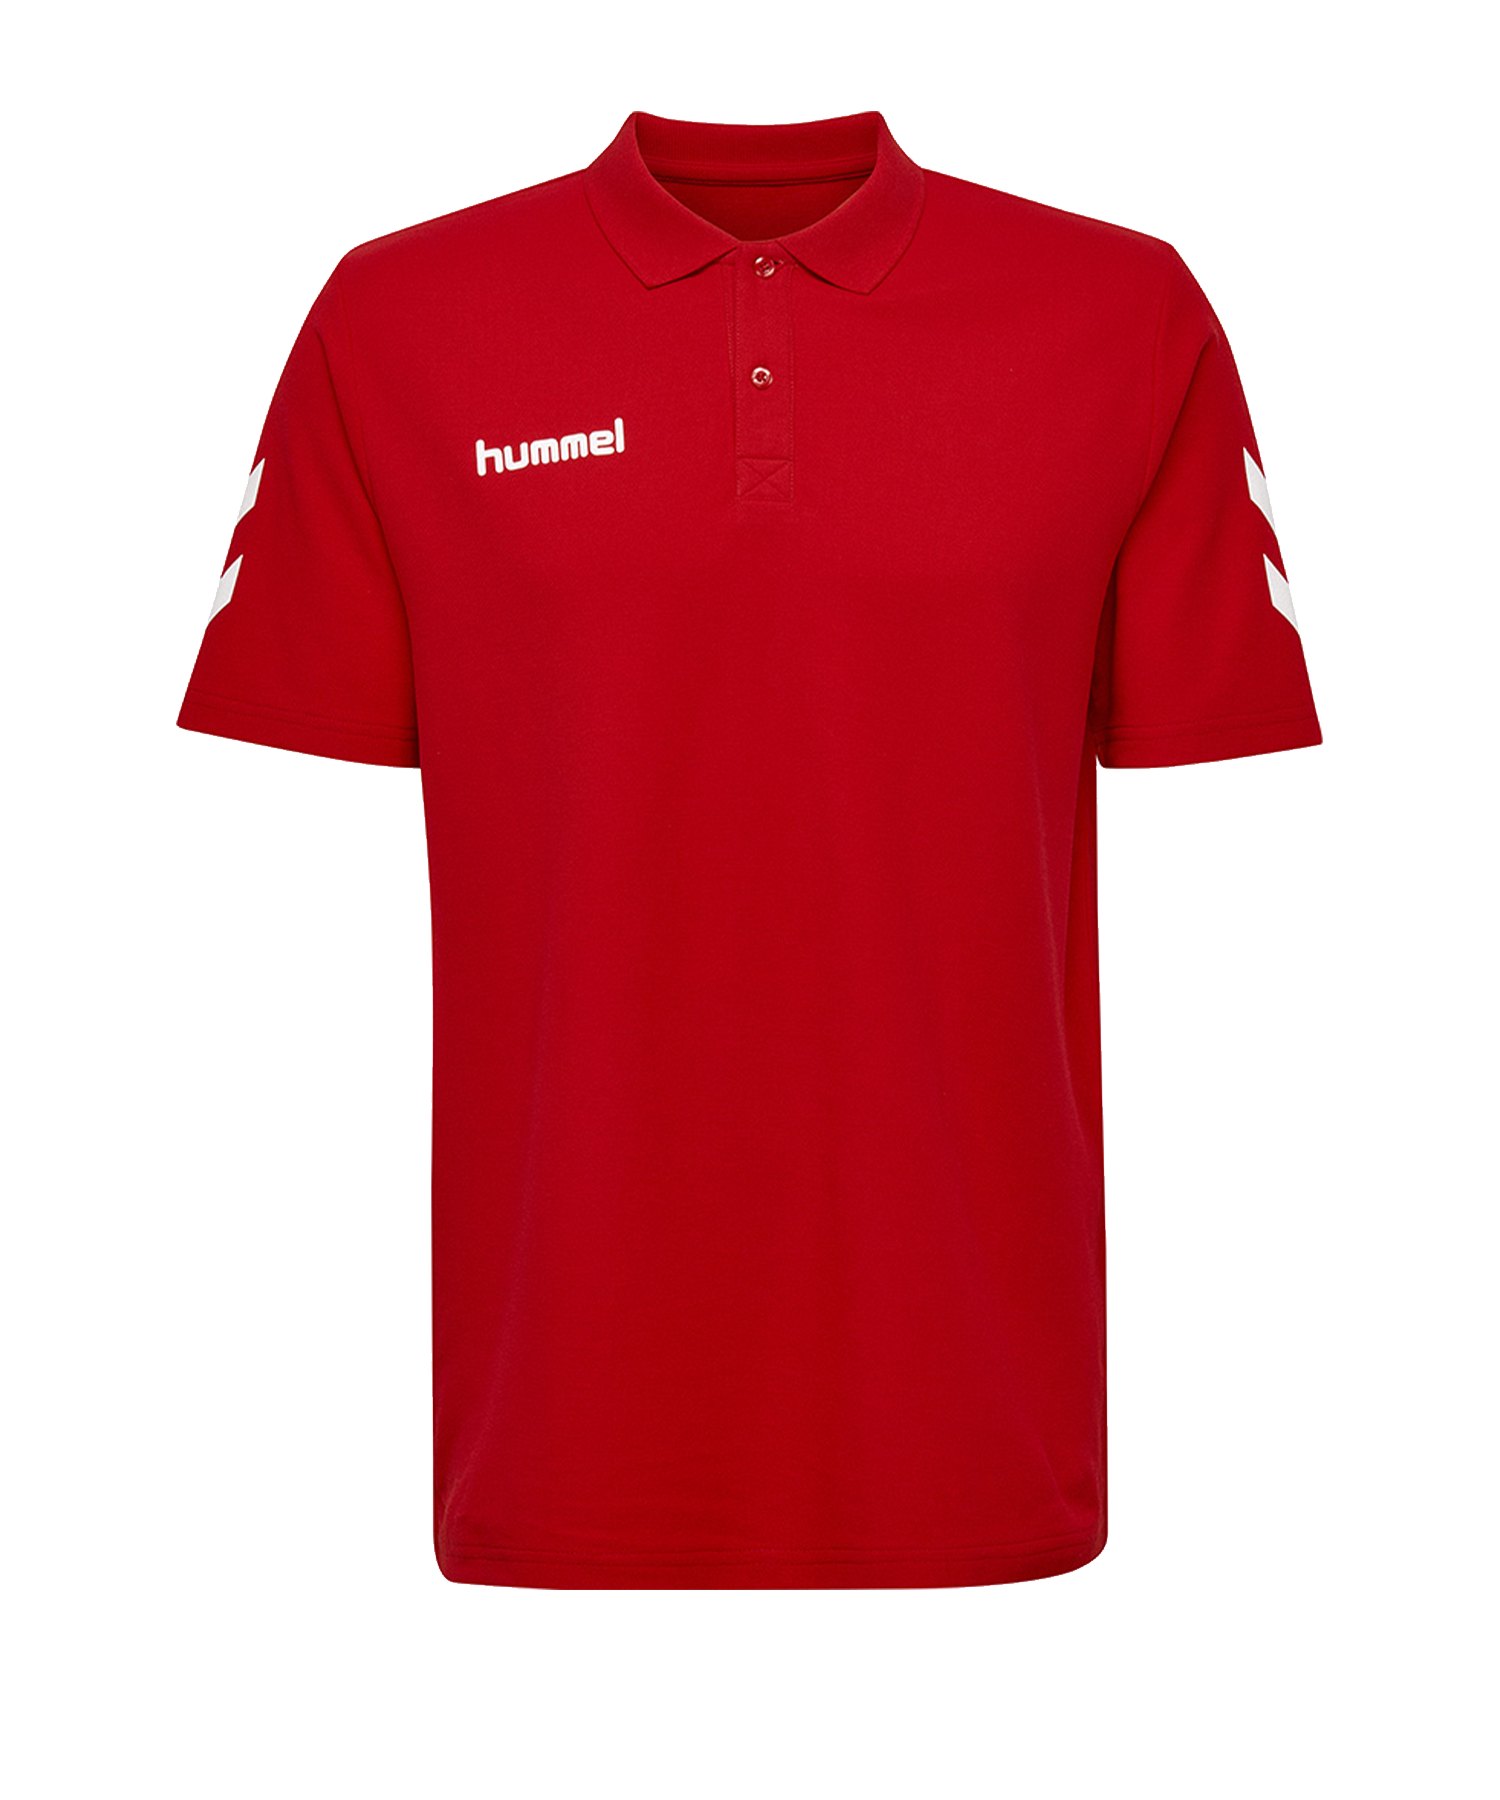 Hummel Cotton Poloshirt Rot F3062 - Rot